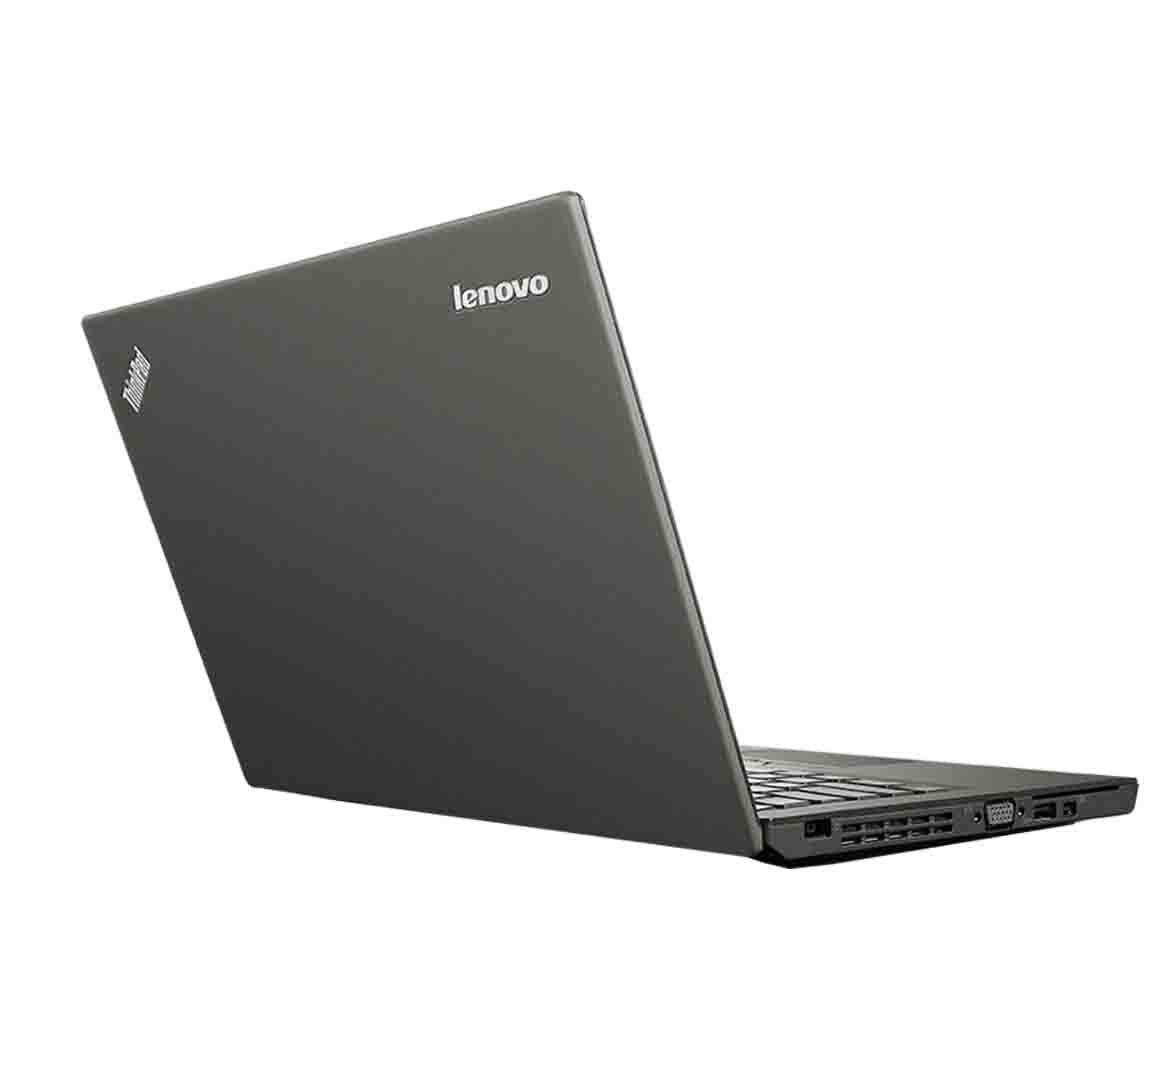 Lenovo ThinkPad X250 Business Laptop, Intel Core i5-4th Generation CPU, 8GB RAM, 256GB SSD, 12.5 inch Display, Windows 10